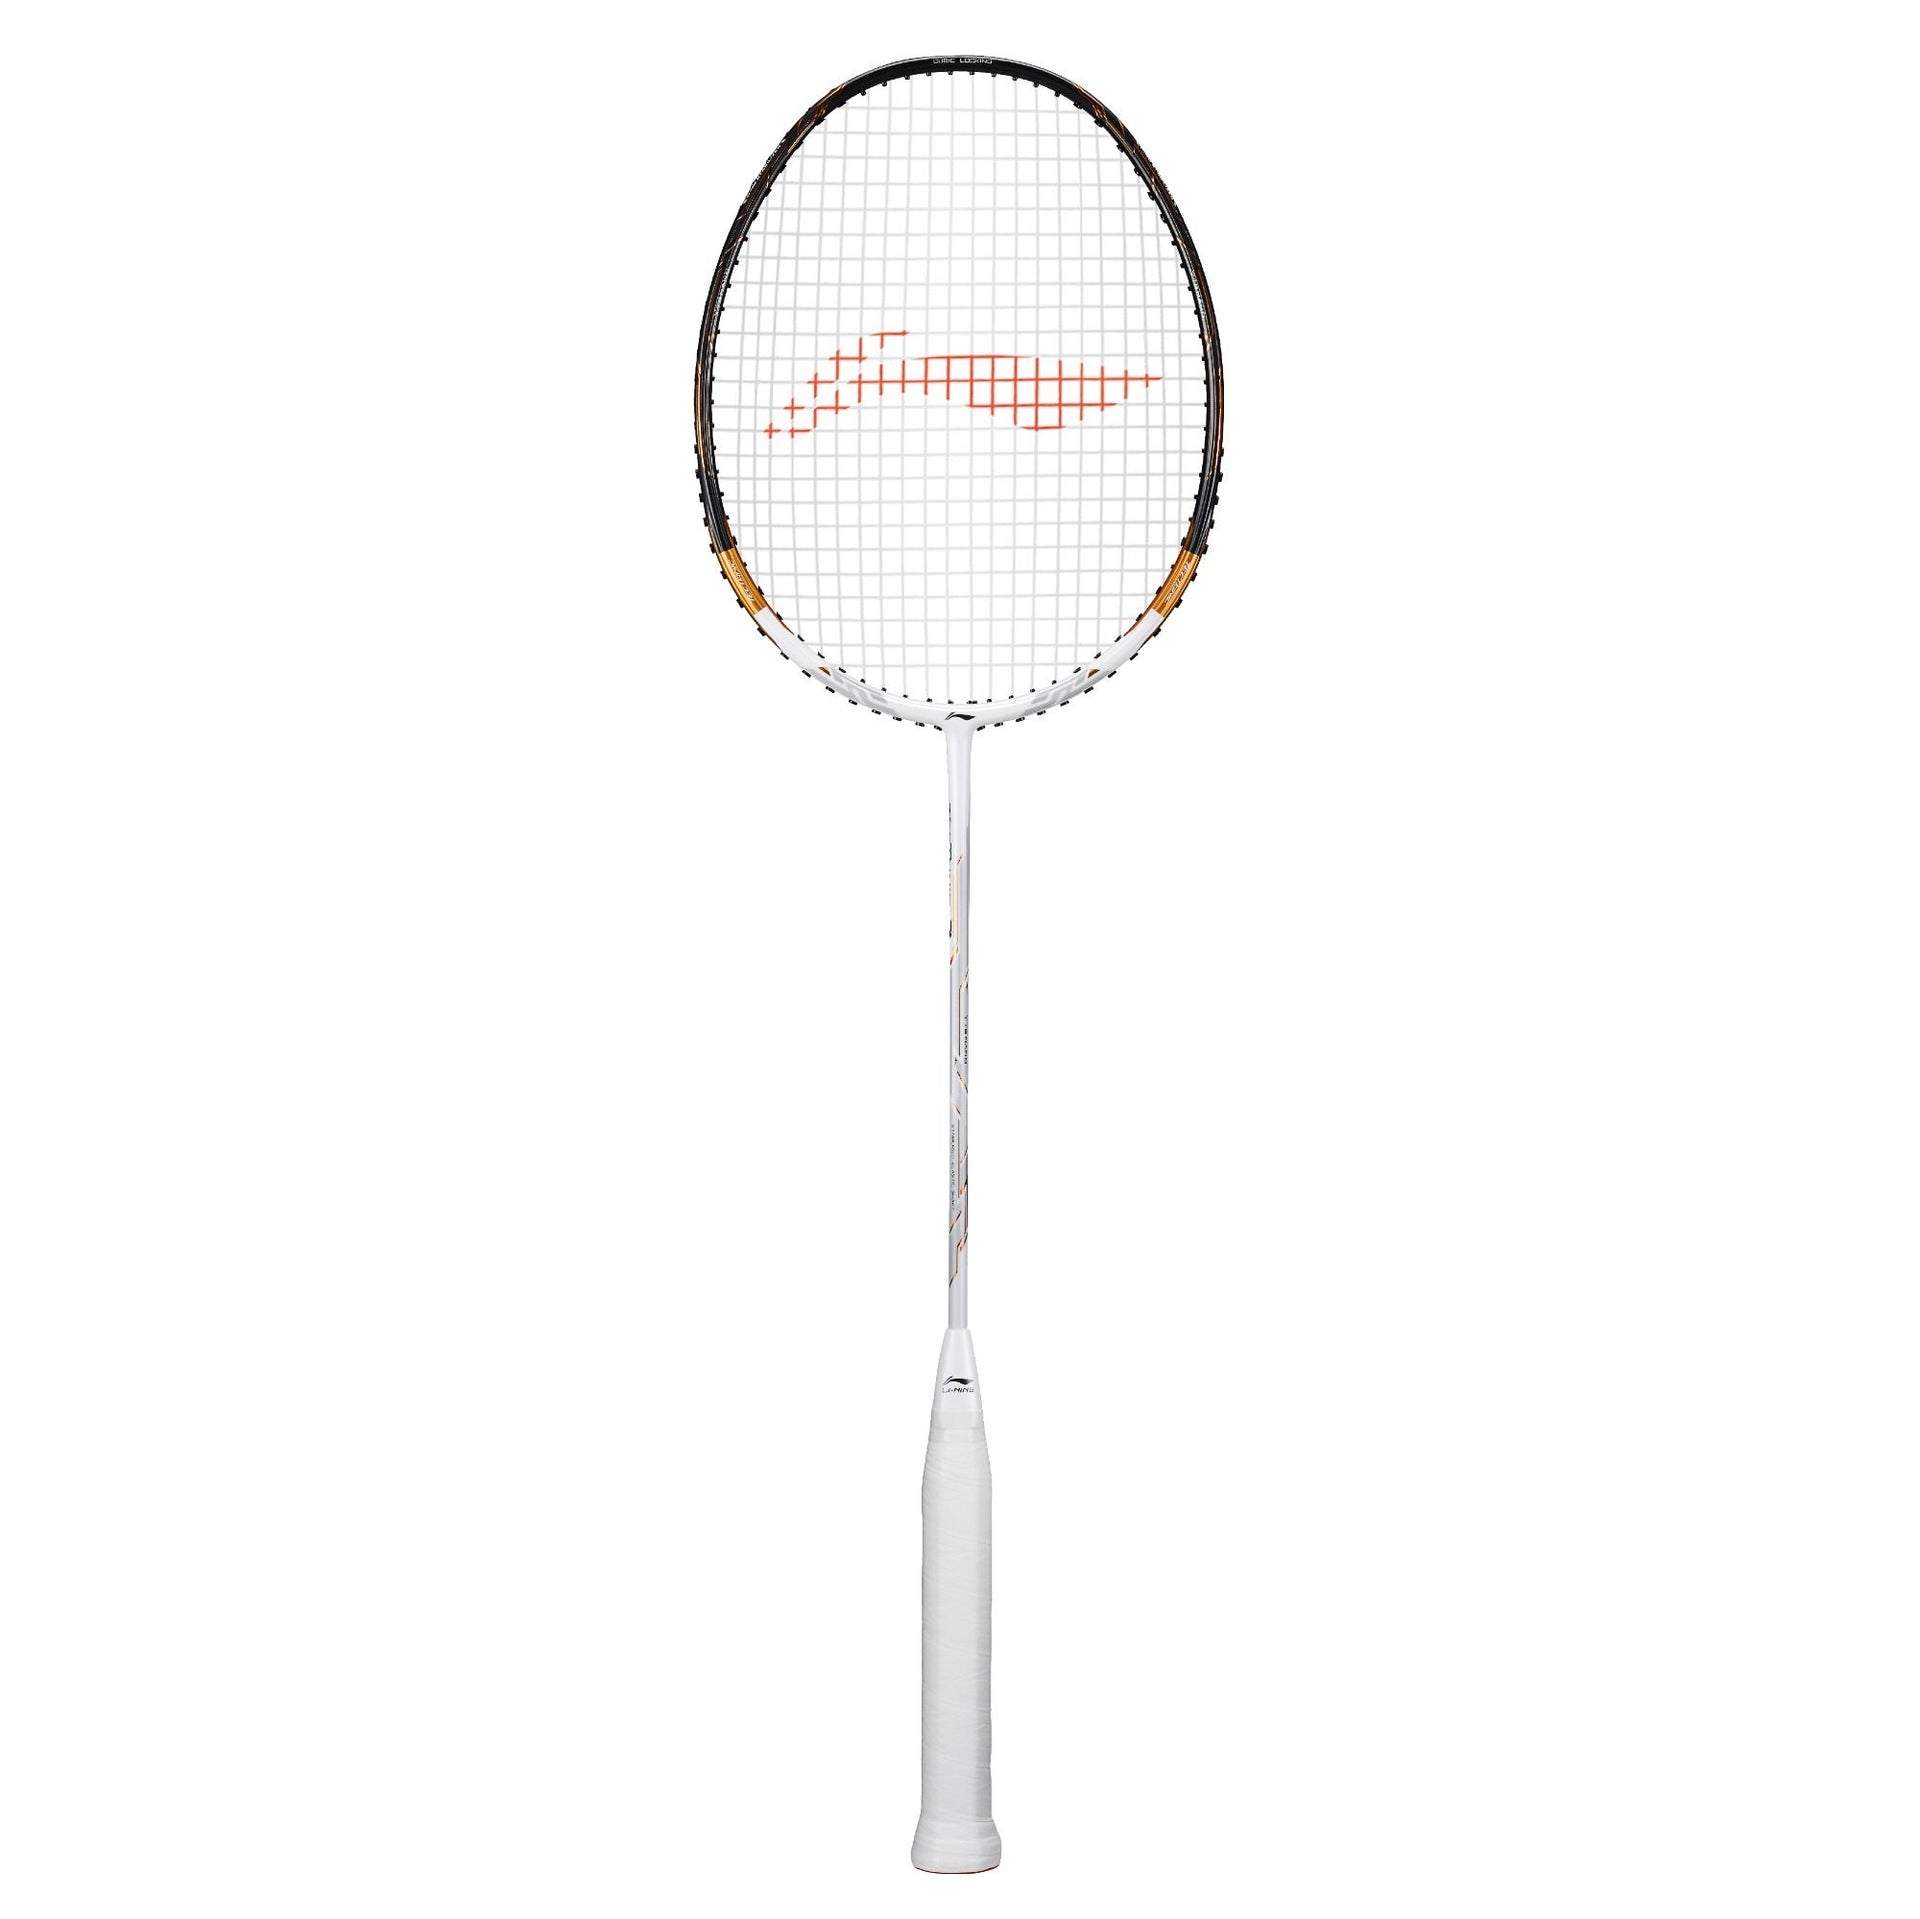 LI-NING Tectonic 7 Badminton Racket | Power and Control